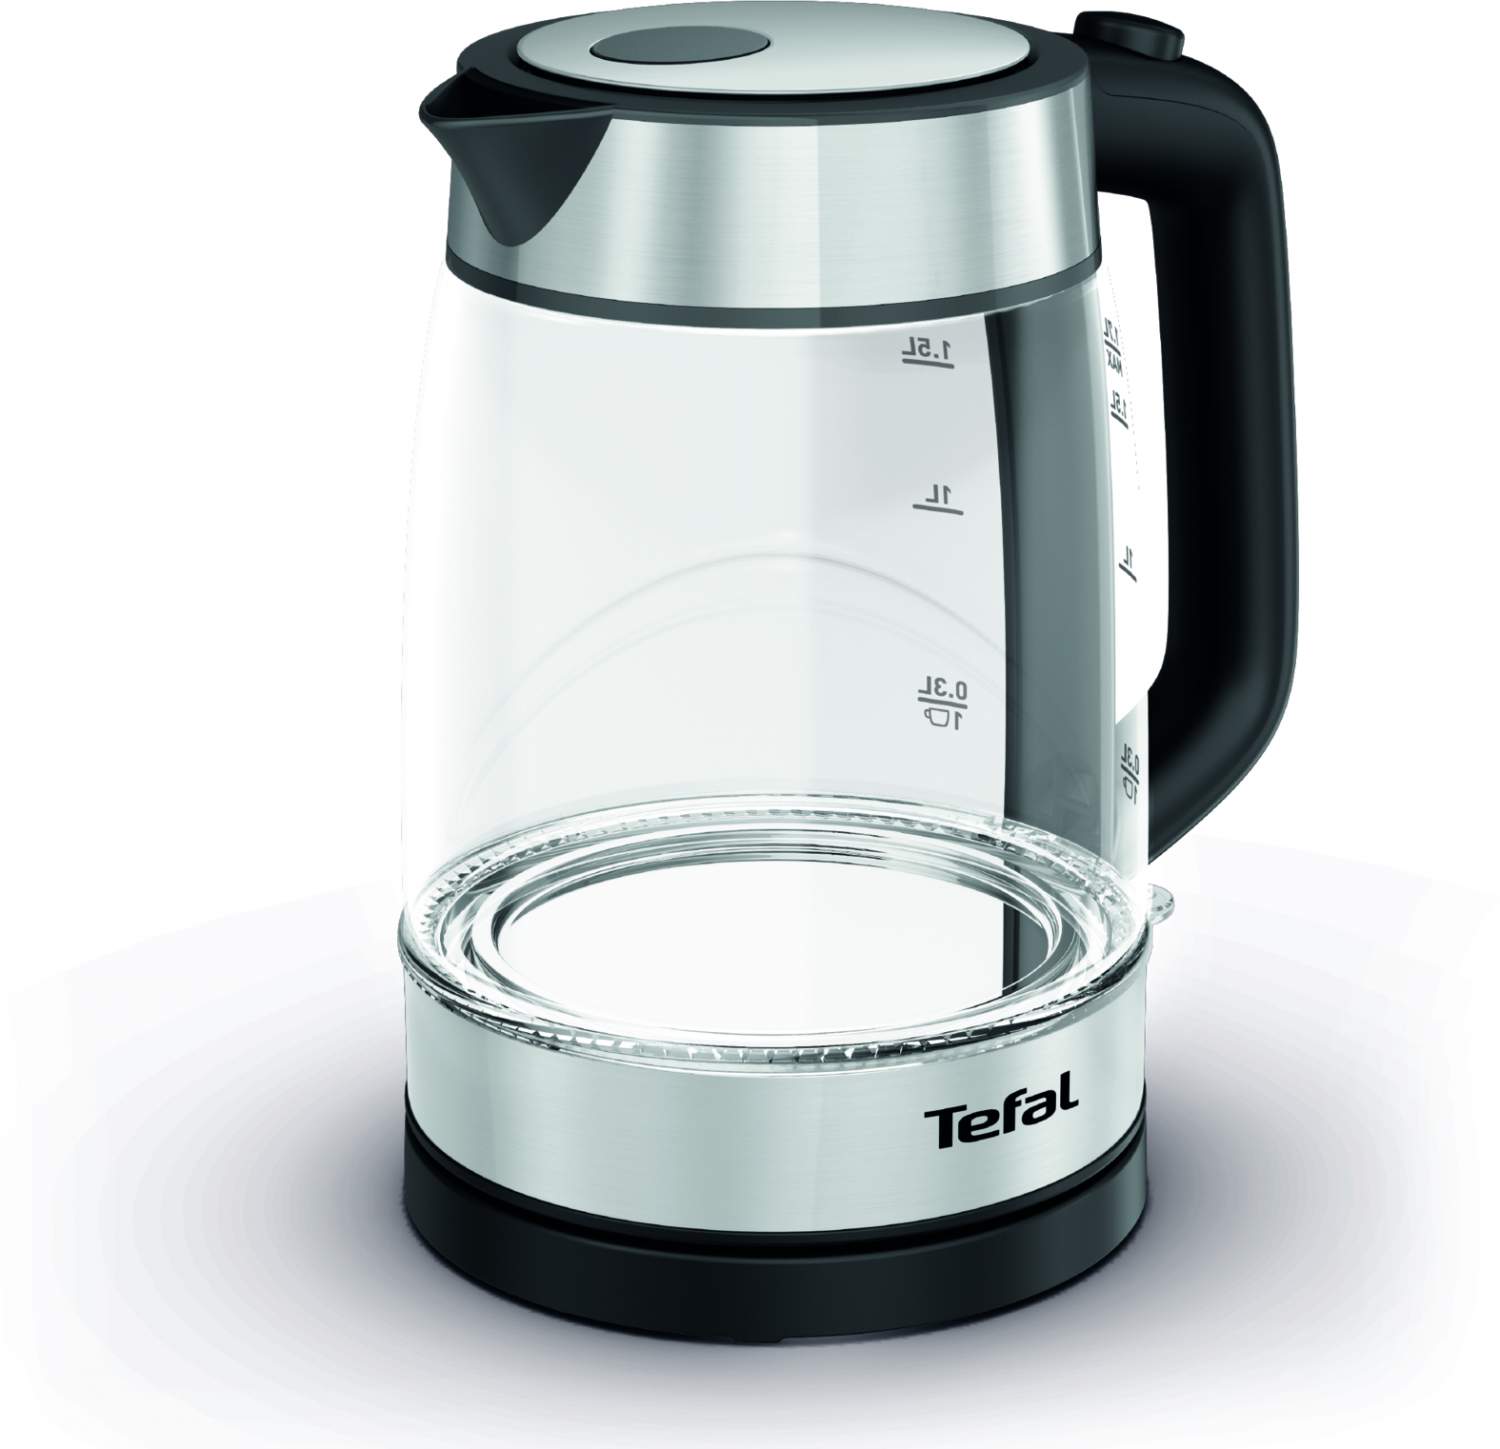 Чайники Tefal () -  чайник  электрический, цены на .